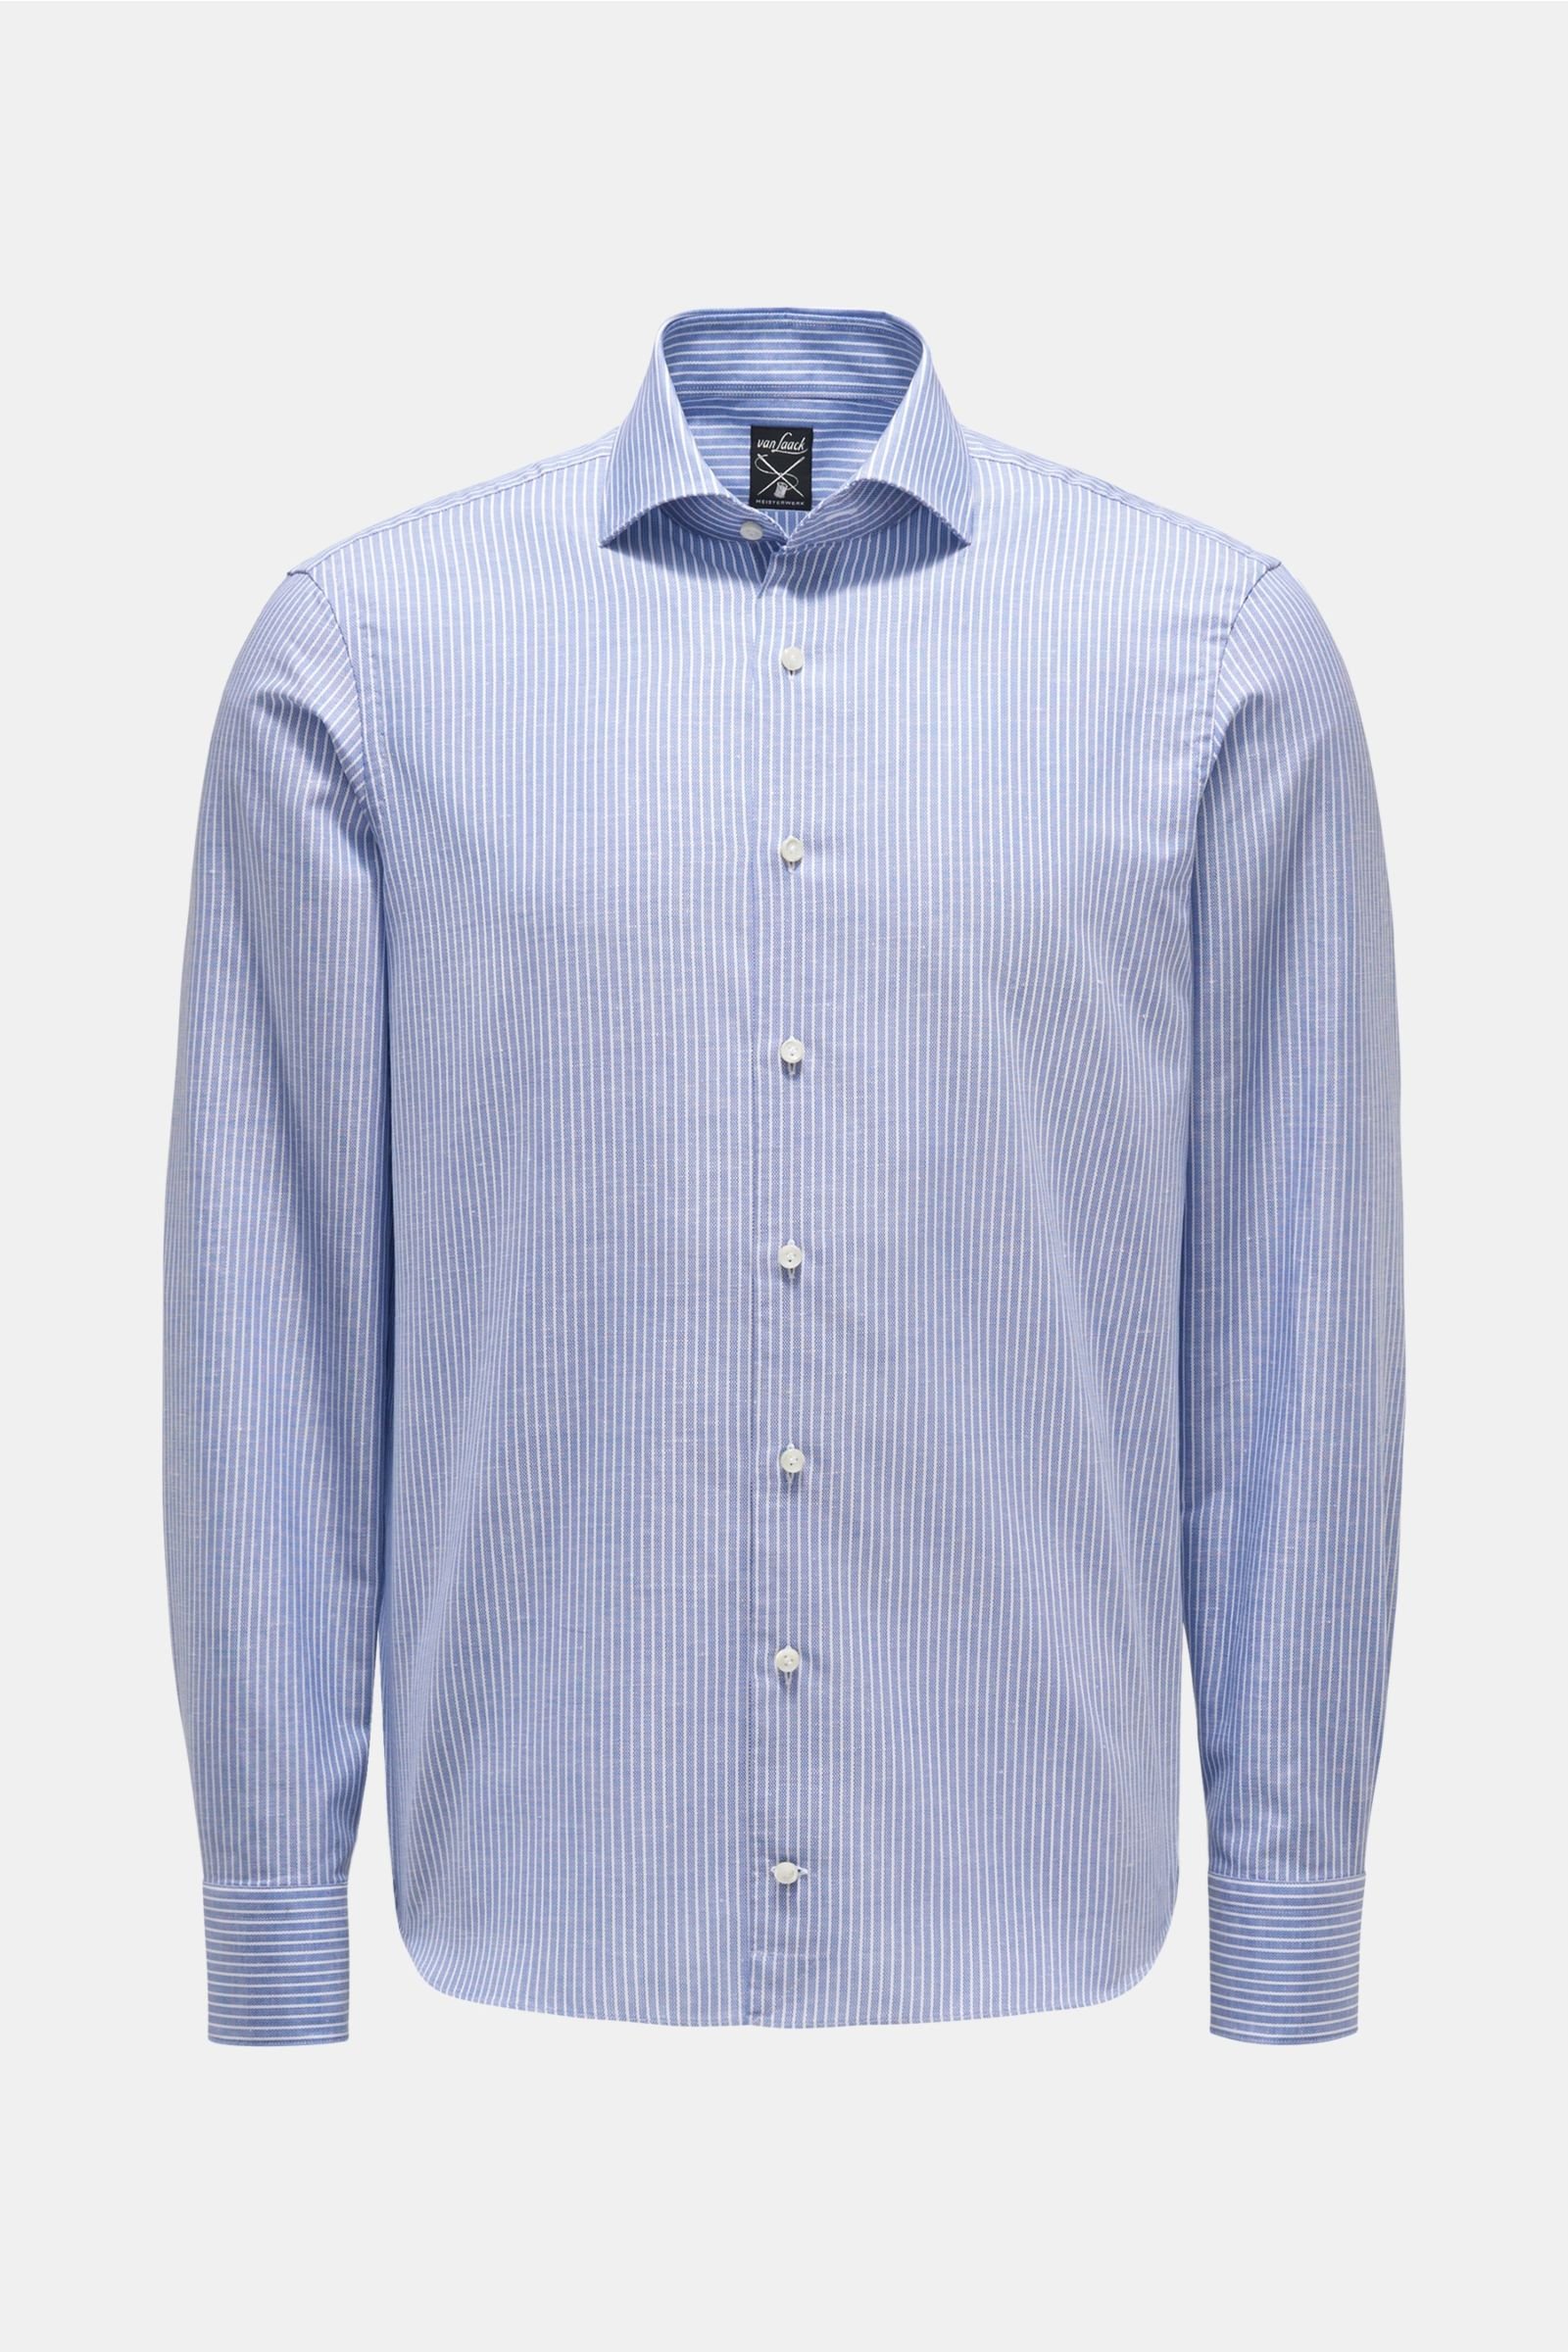 Casual shirt 'Mivara Tailor Fit' shark collar grey-blue/white striped